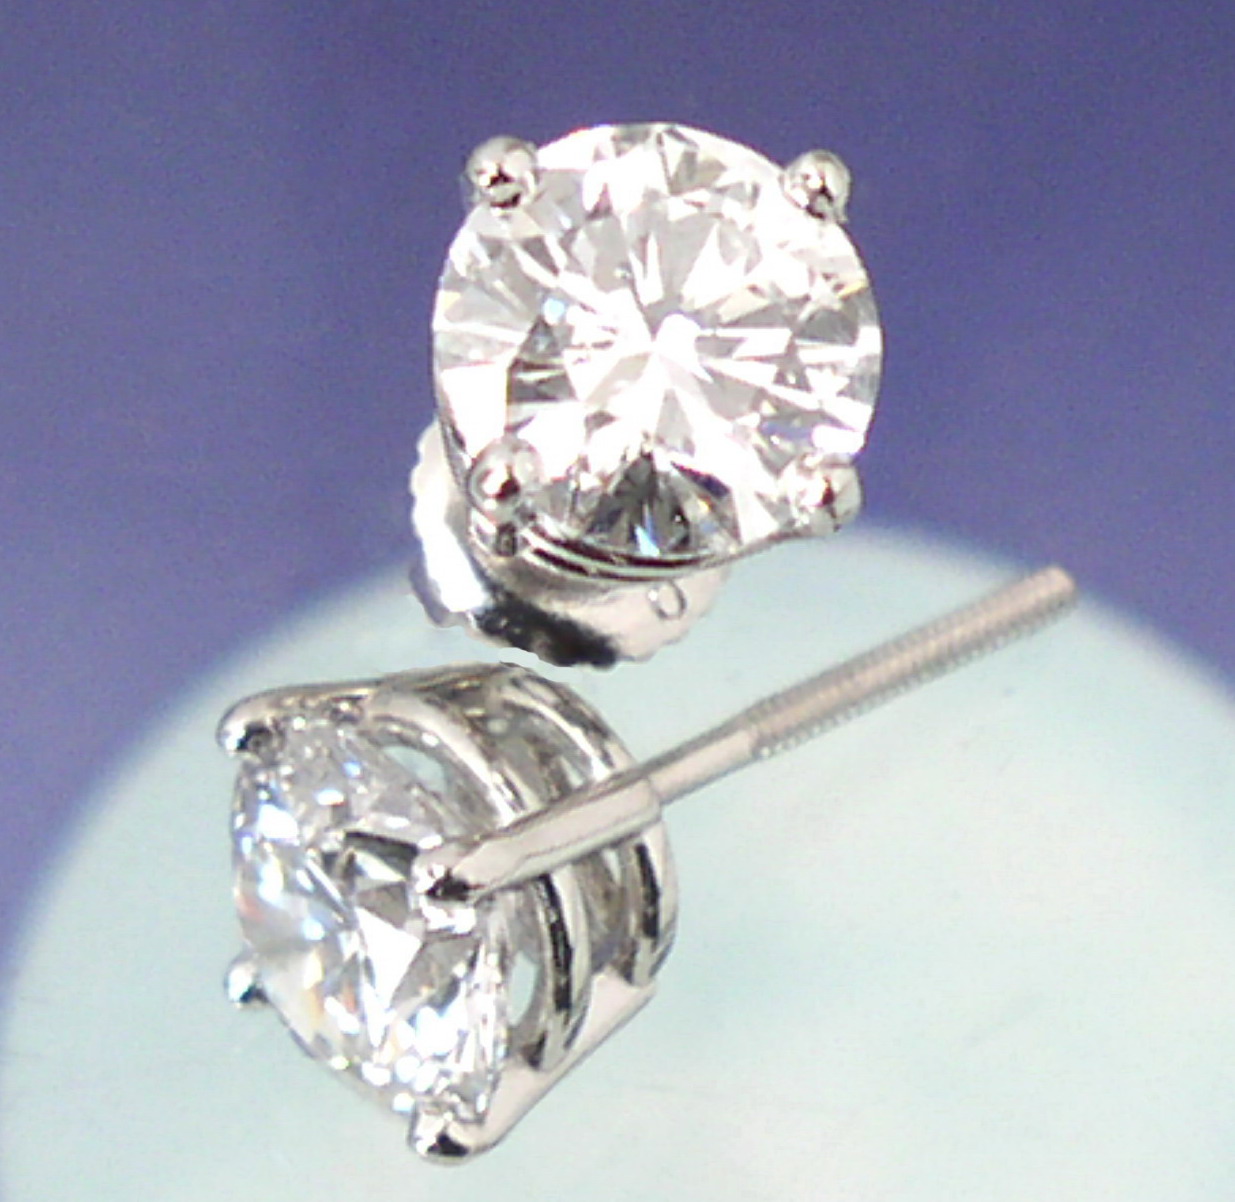 canada diamond earrings, canada diamond pendants, canada made diamond jewelery